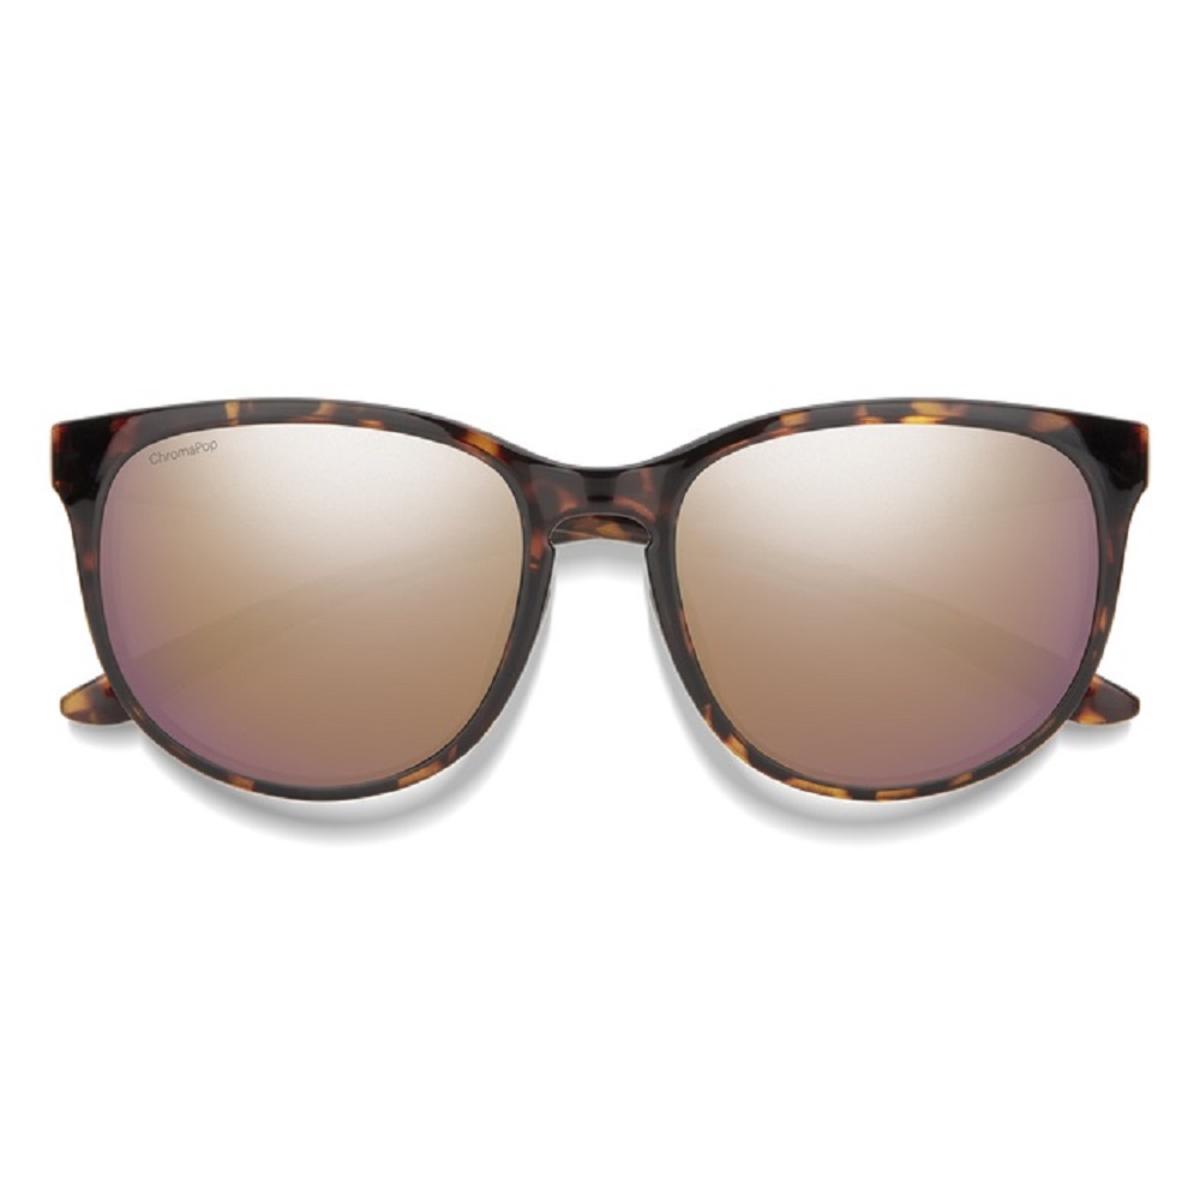 Smith Optics Lake Shasta Sunglasses ChromaPop Polarized Rose Gold Mirror - Tortoise Frame